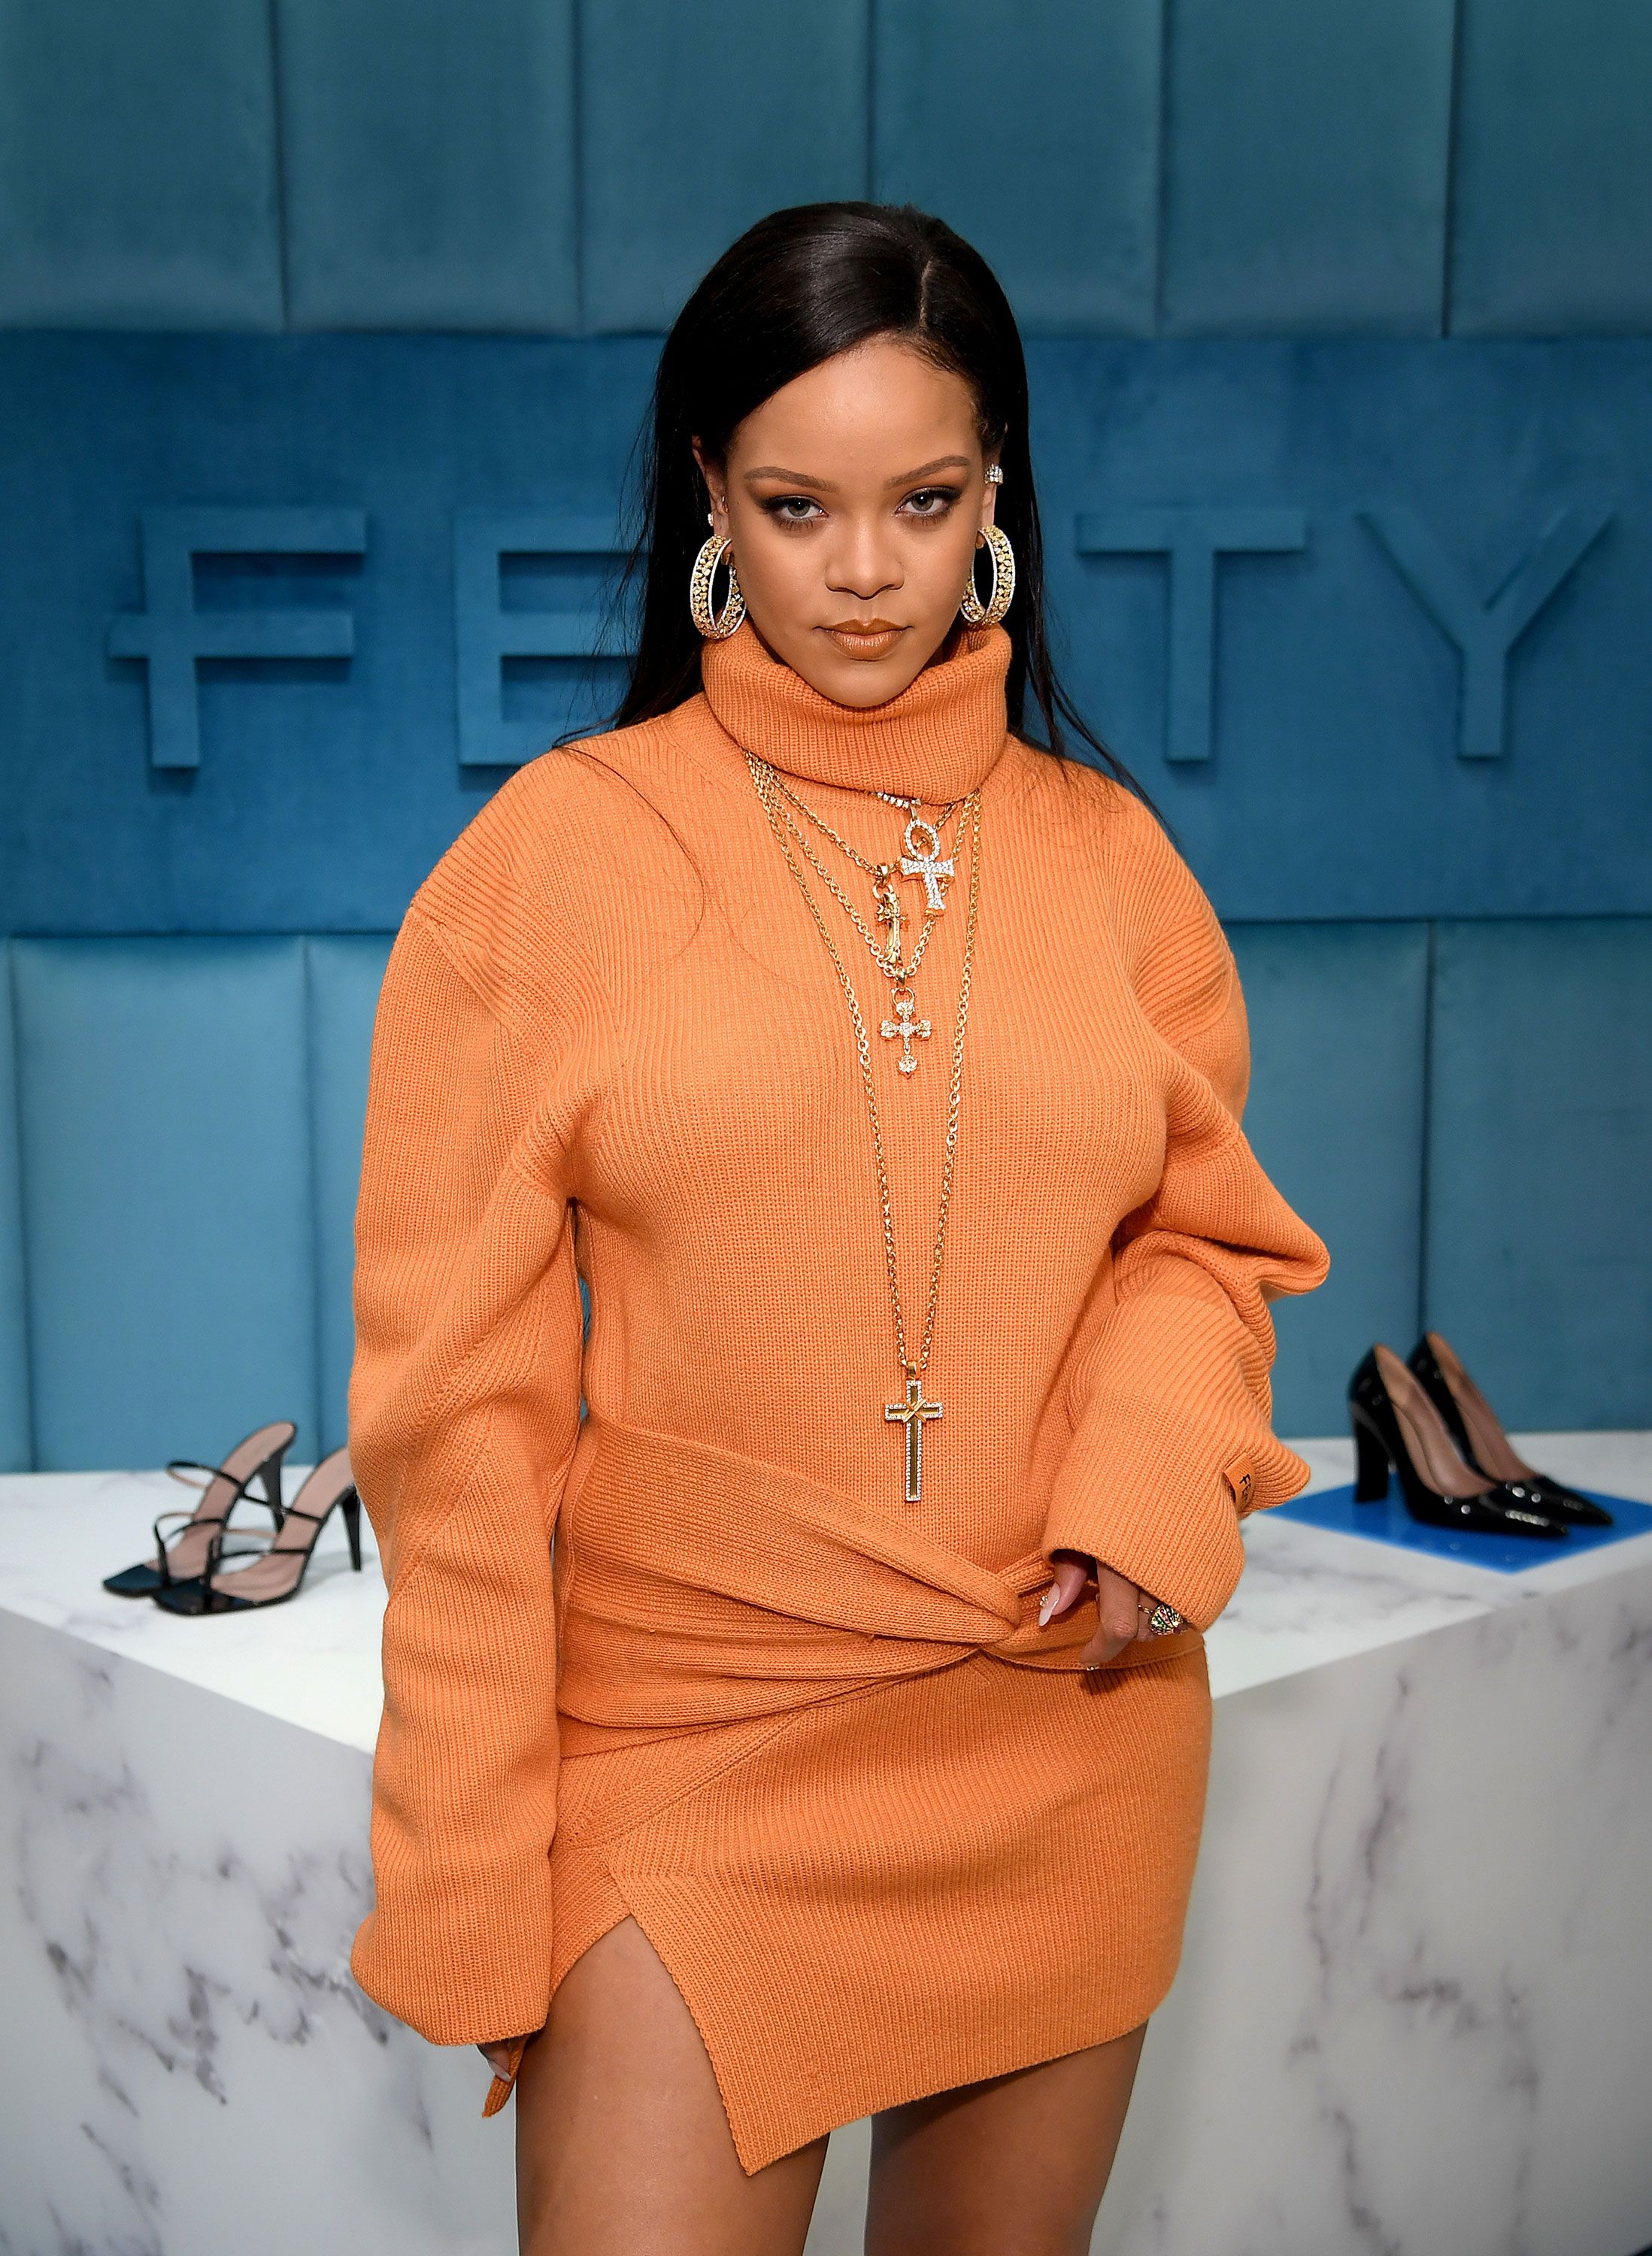 Rihanna Is Bringing Savage X Fenty to Your TV